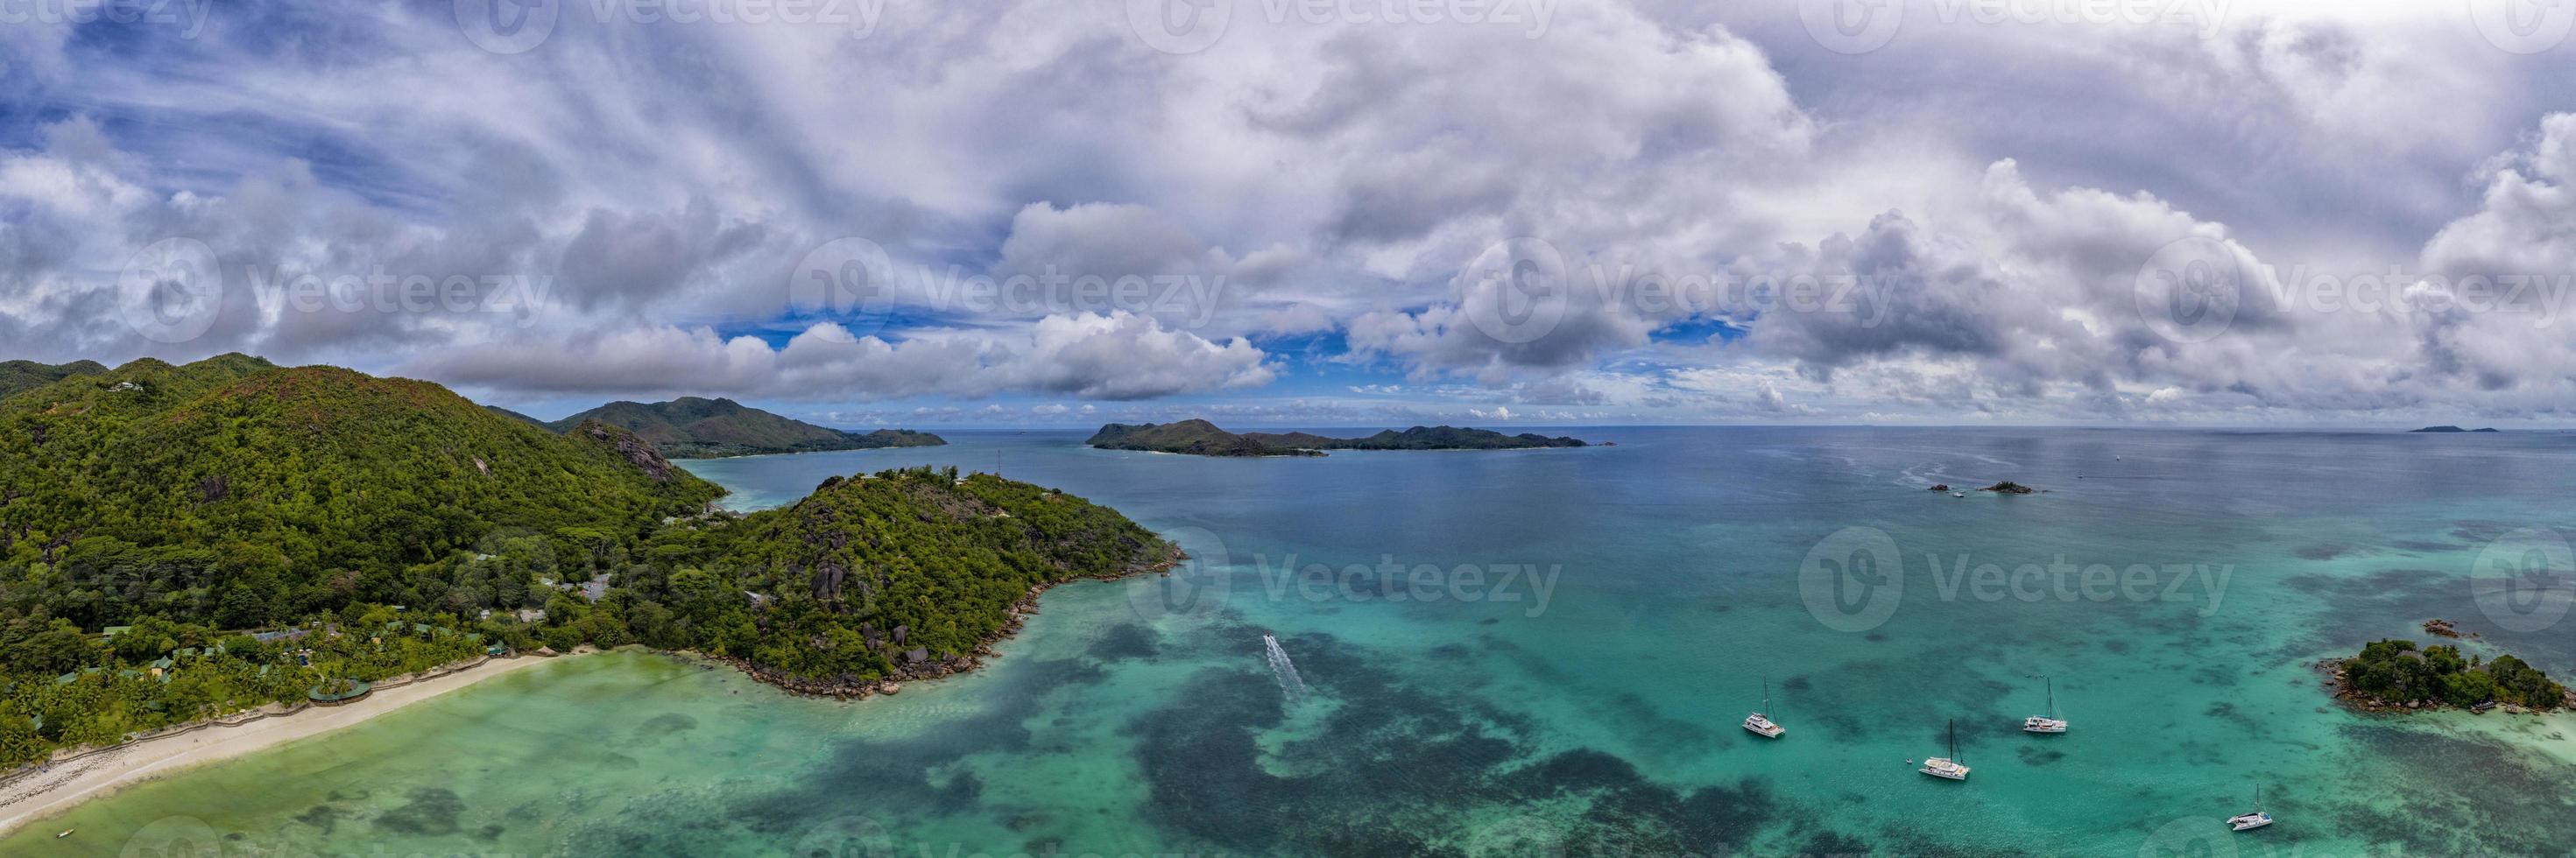 praslin eiland Seychellen paradijs strand antenne dar panorama landschap anse volbert foto